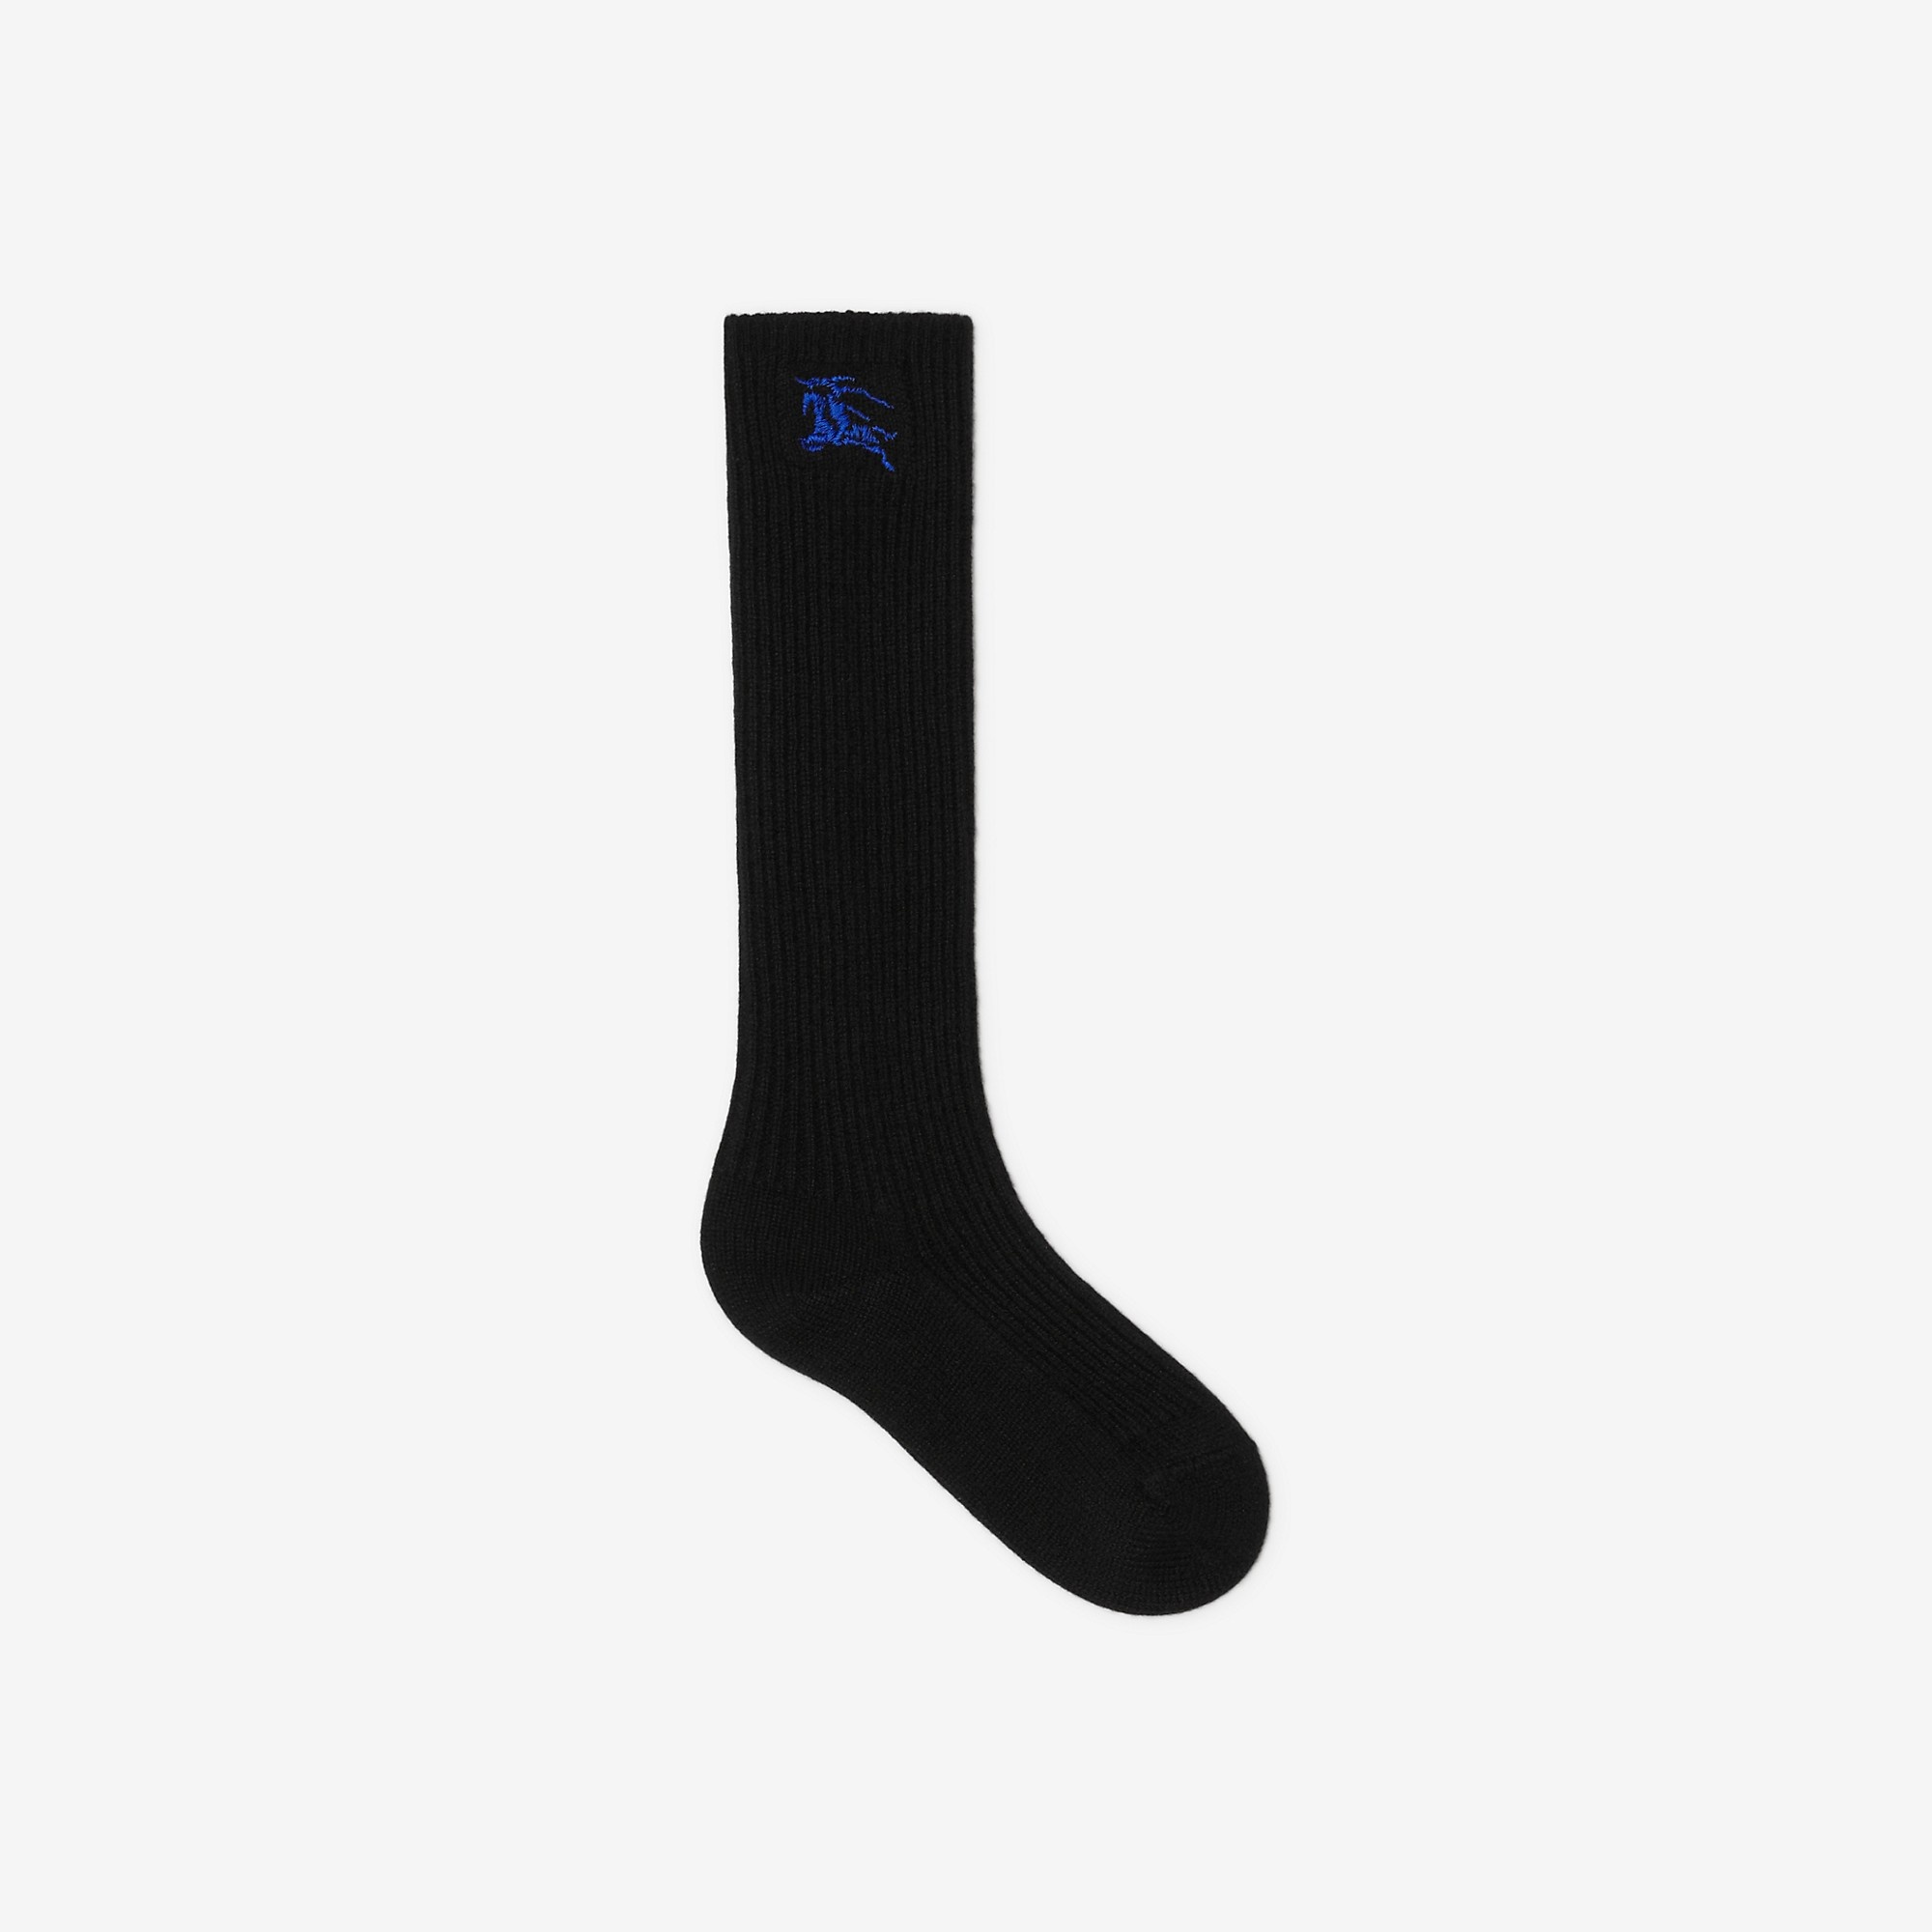 EKD Ribbed Socks - 1